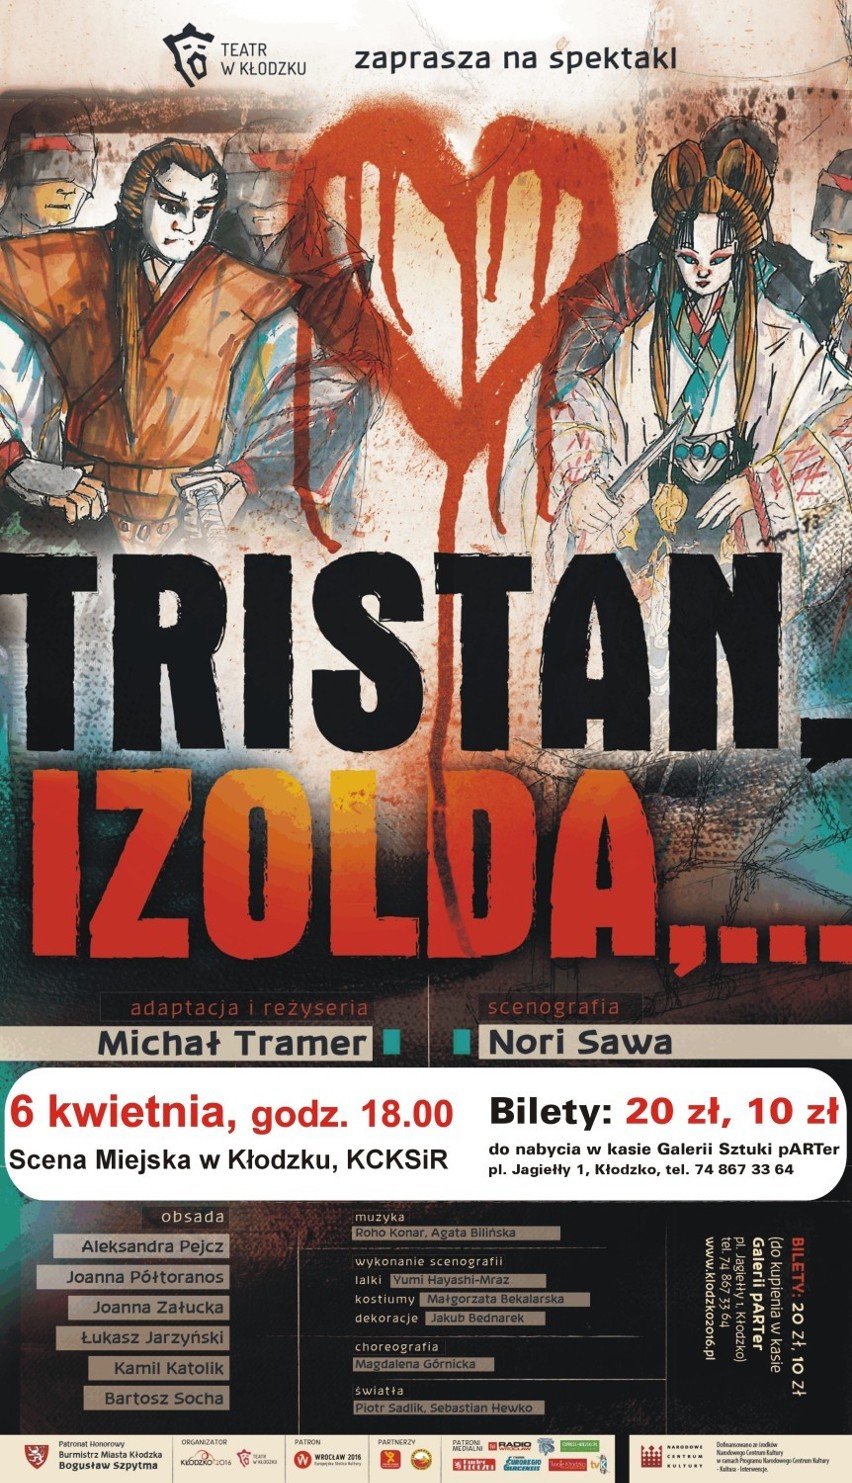 Tristan, Izolda...